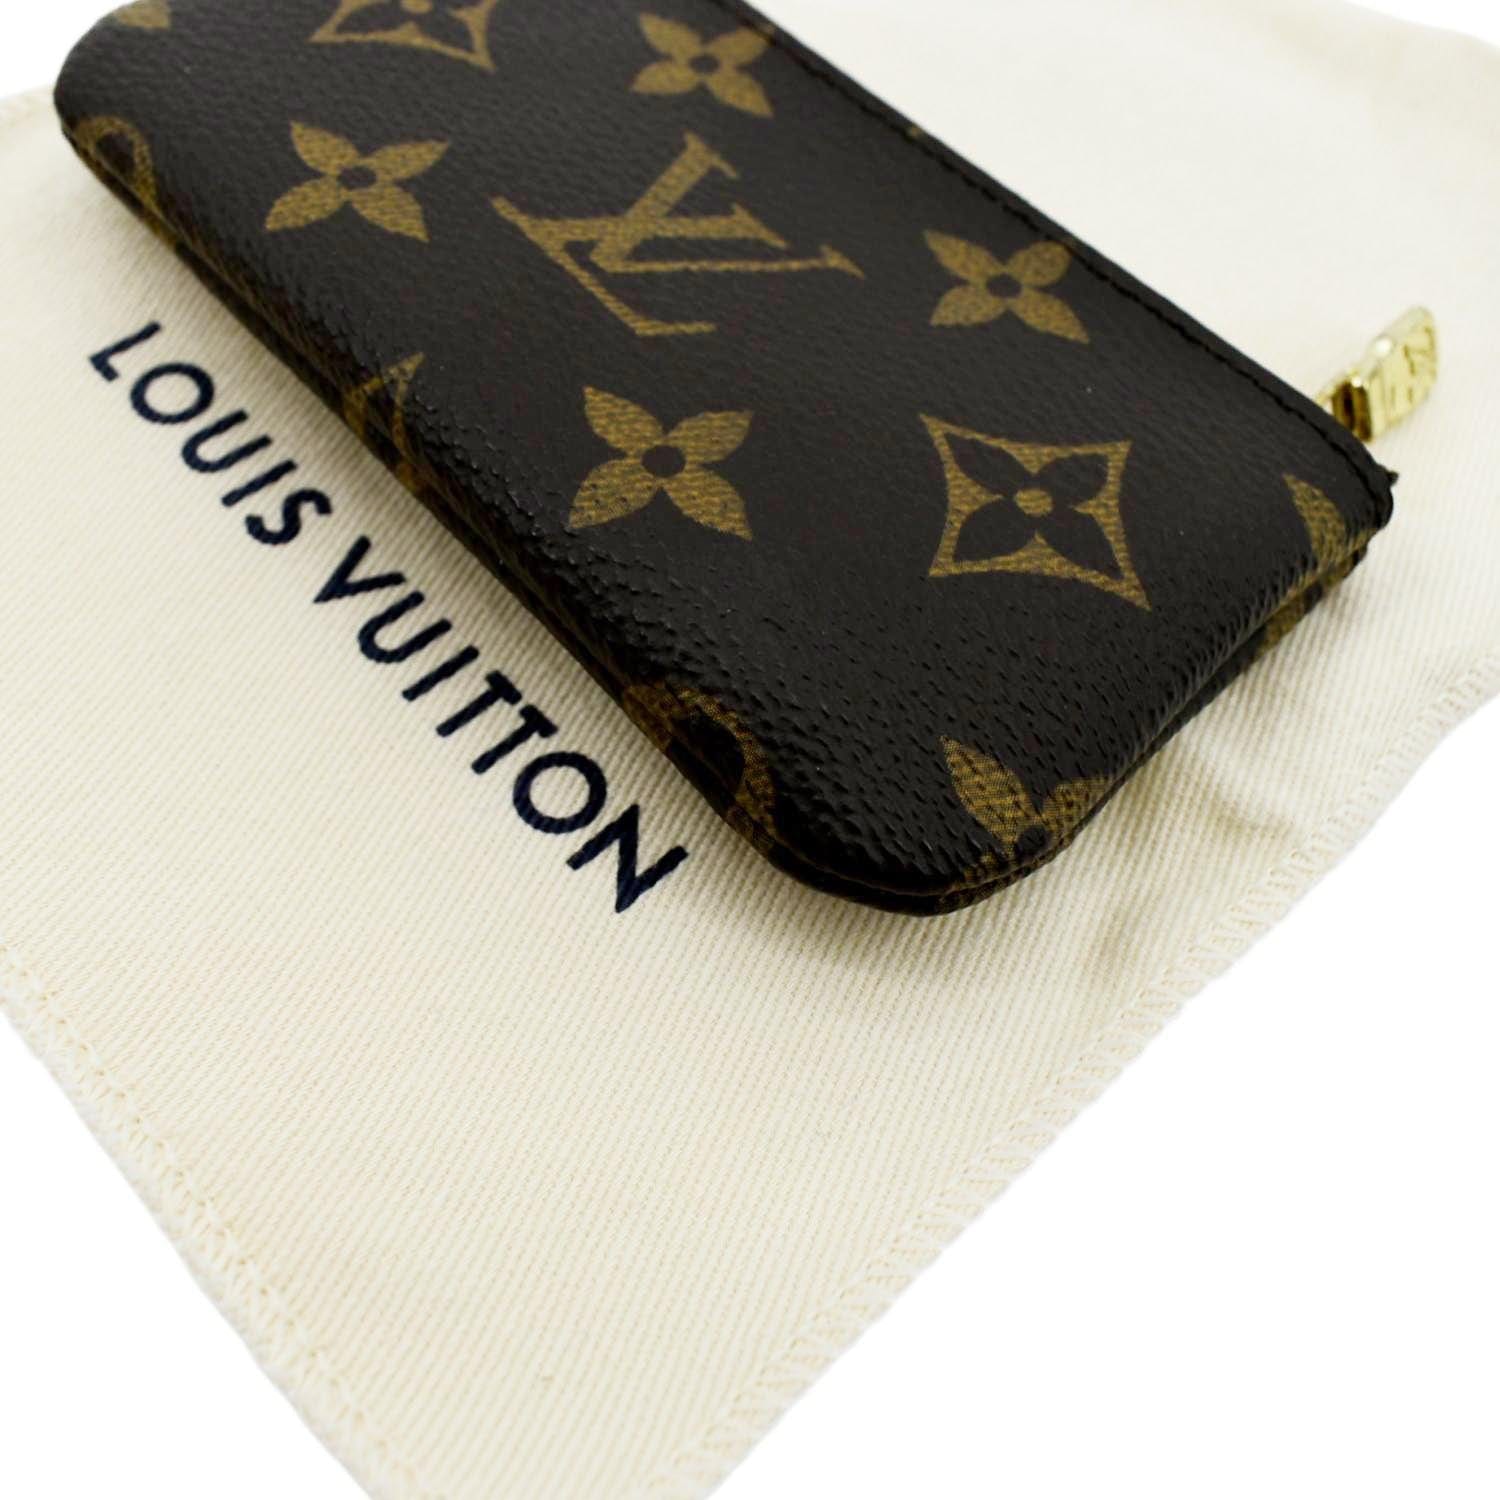 Louis Vuitton Women's Pre-Loved Pochette Cles, Monogram, Brown, One Size